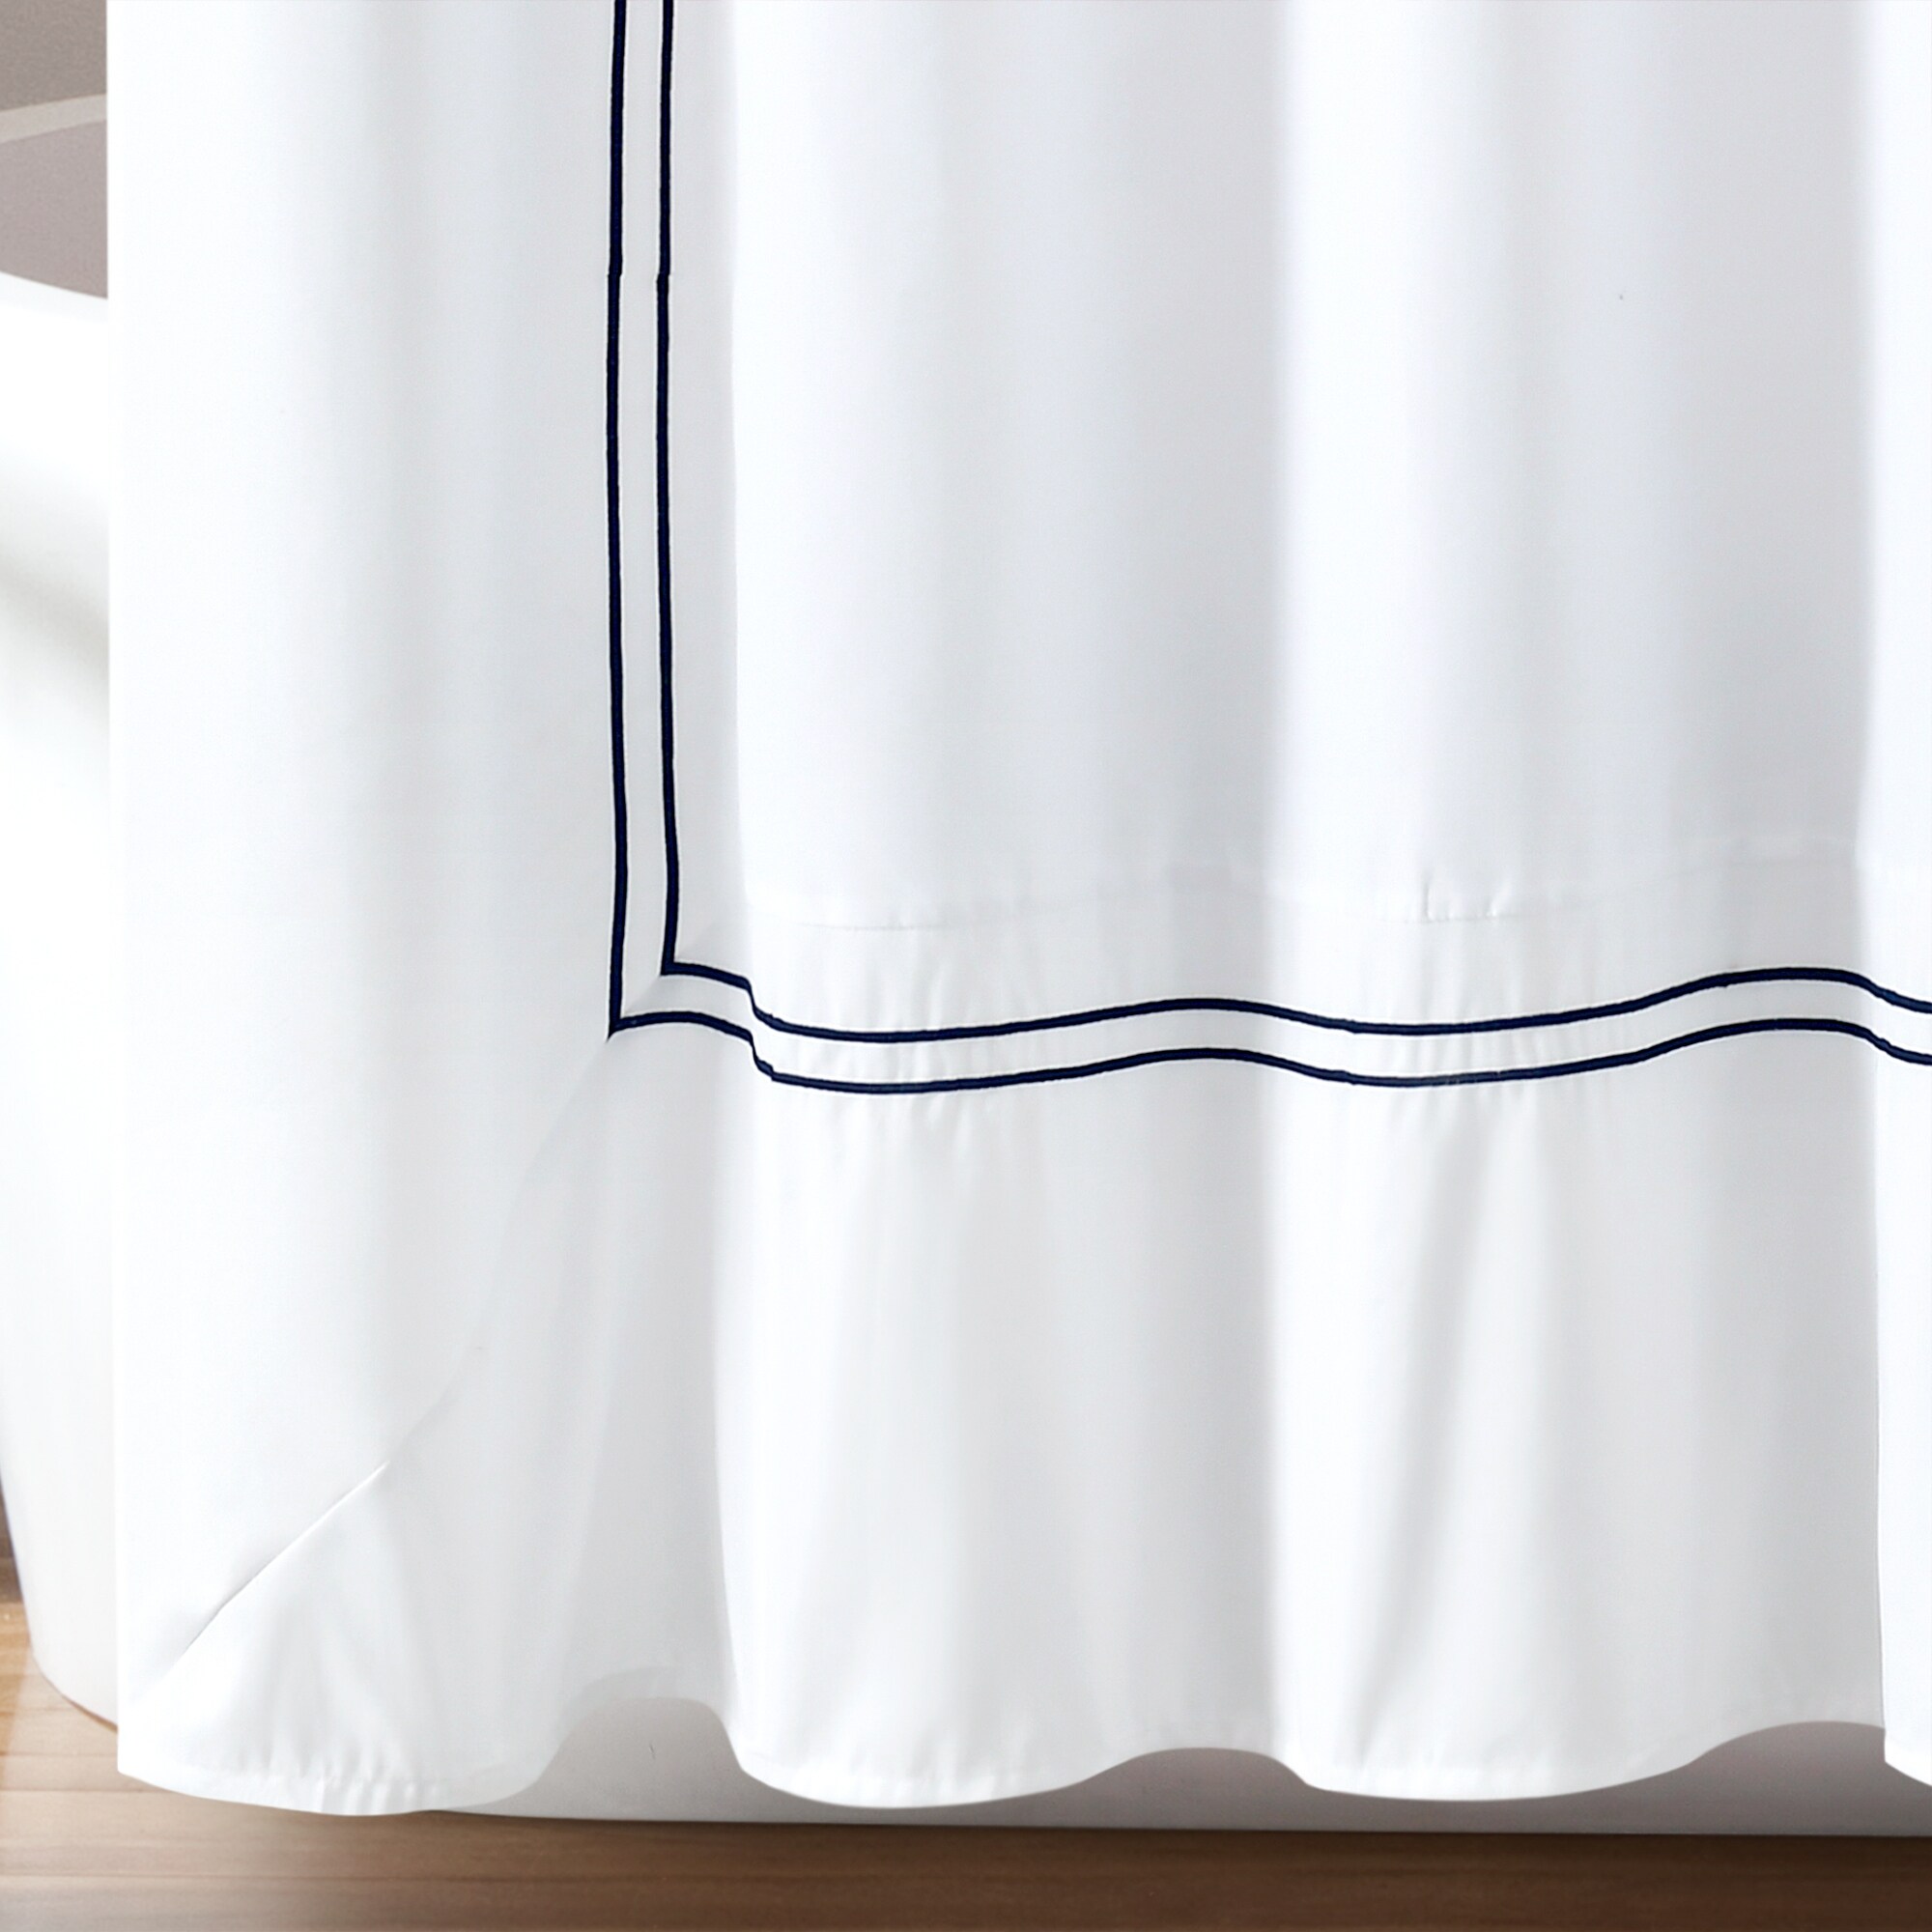 Louis Vuitton Shower Curtain – MY luxurious home